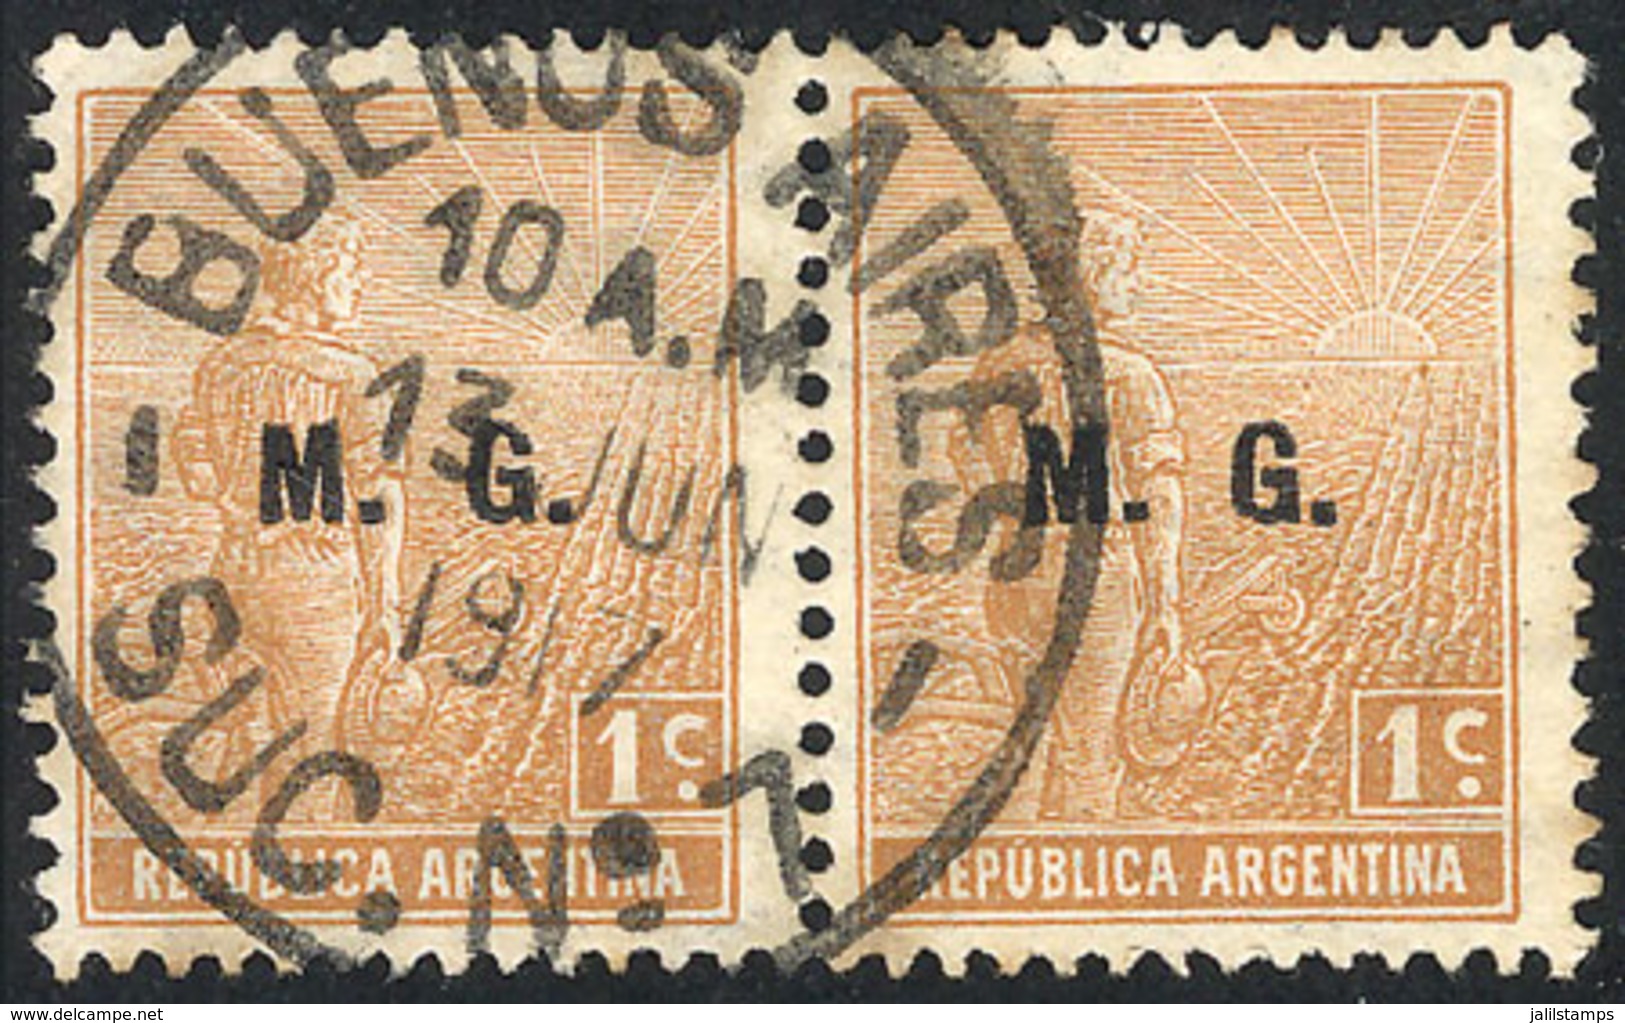 ARGENTINA: GJ.134, 1915 1c. Plowman With M.G. Overprint, Italian Paper With Horiz Honeycomb Wmk, Used Pair, VF, Rare! - Service